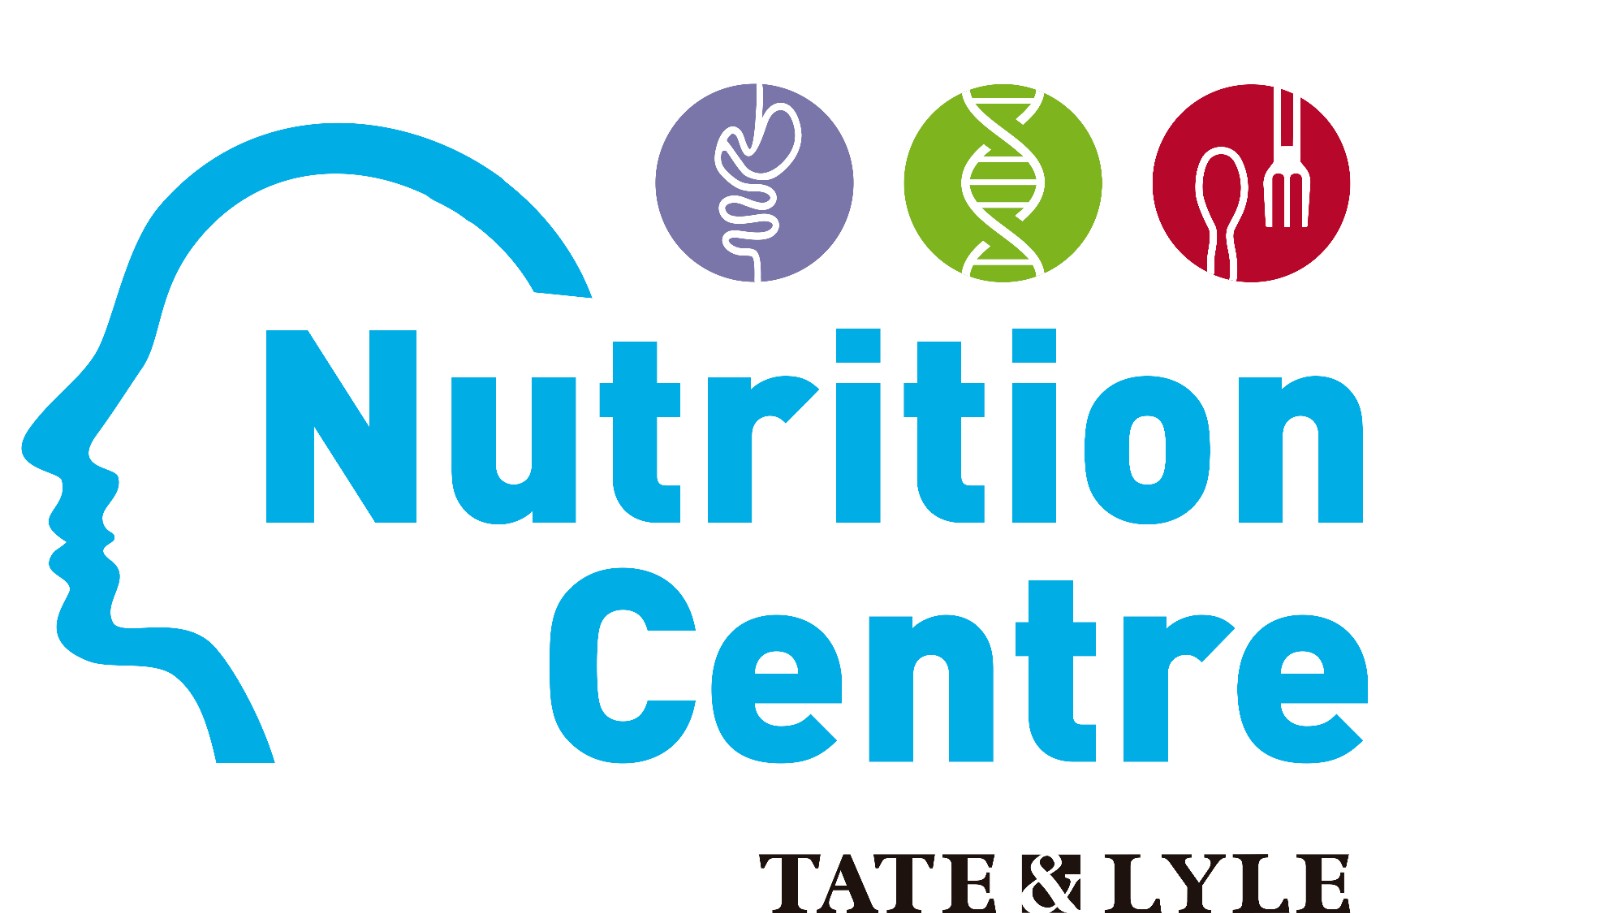 Tate & Lyle Nutrition Centre.jpg